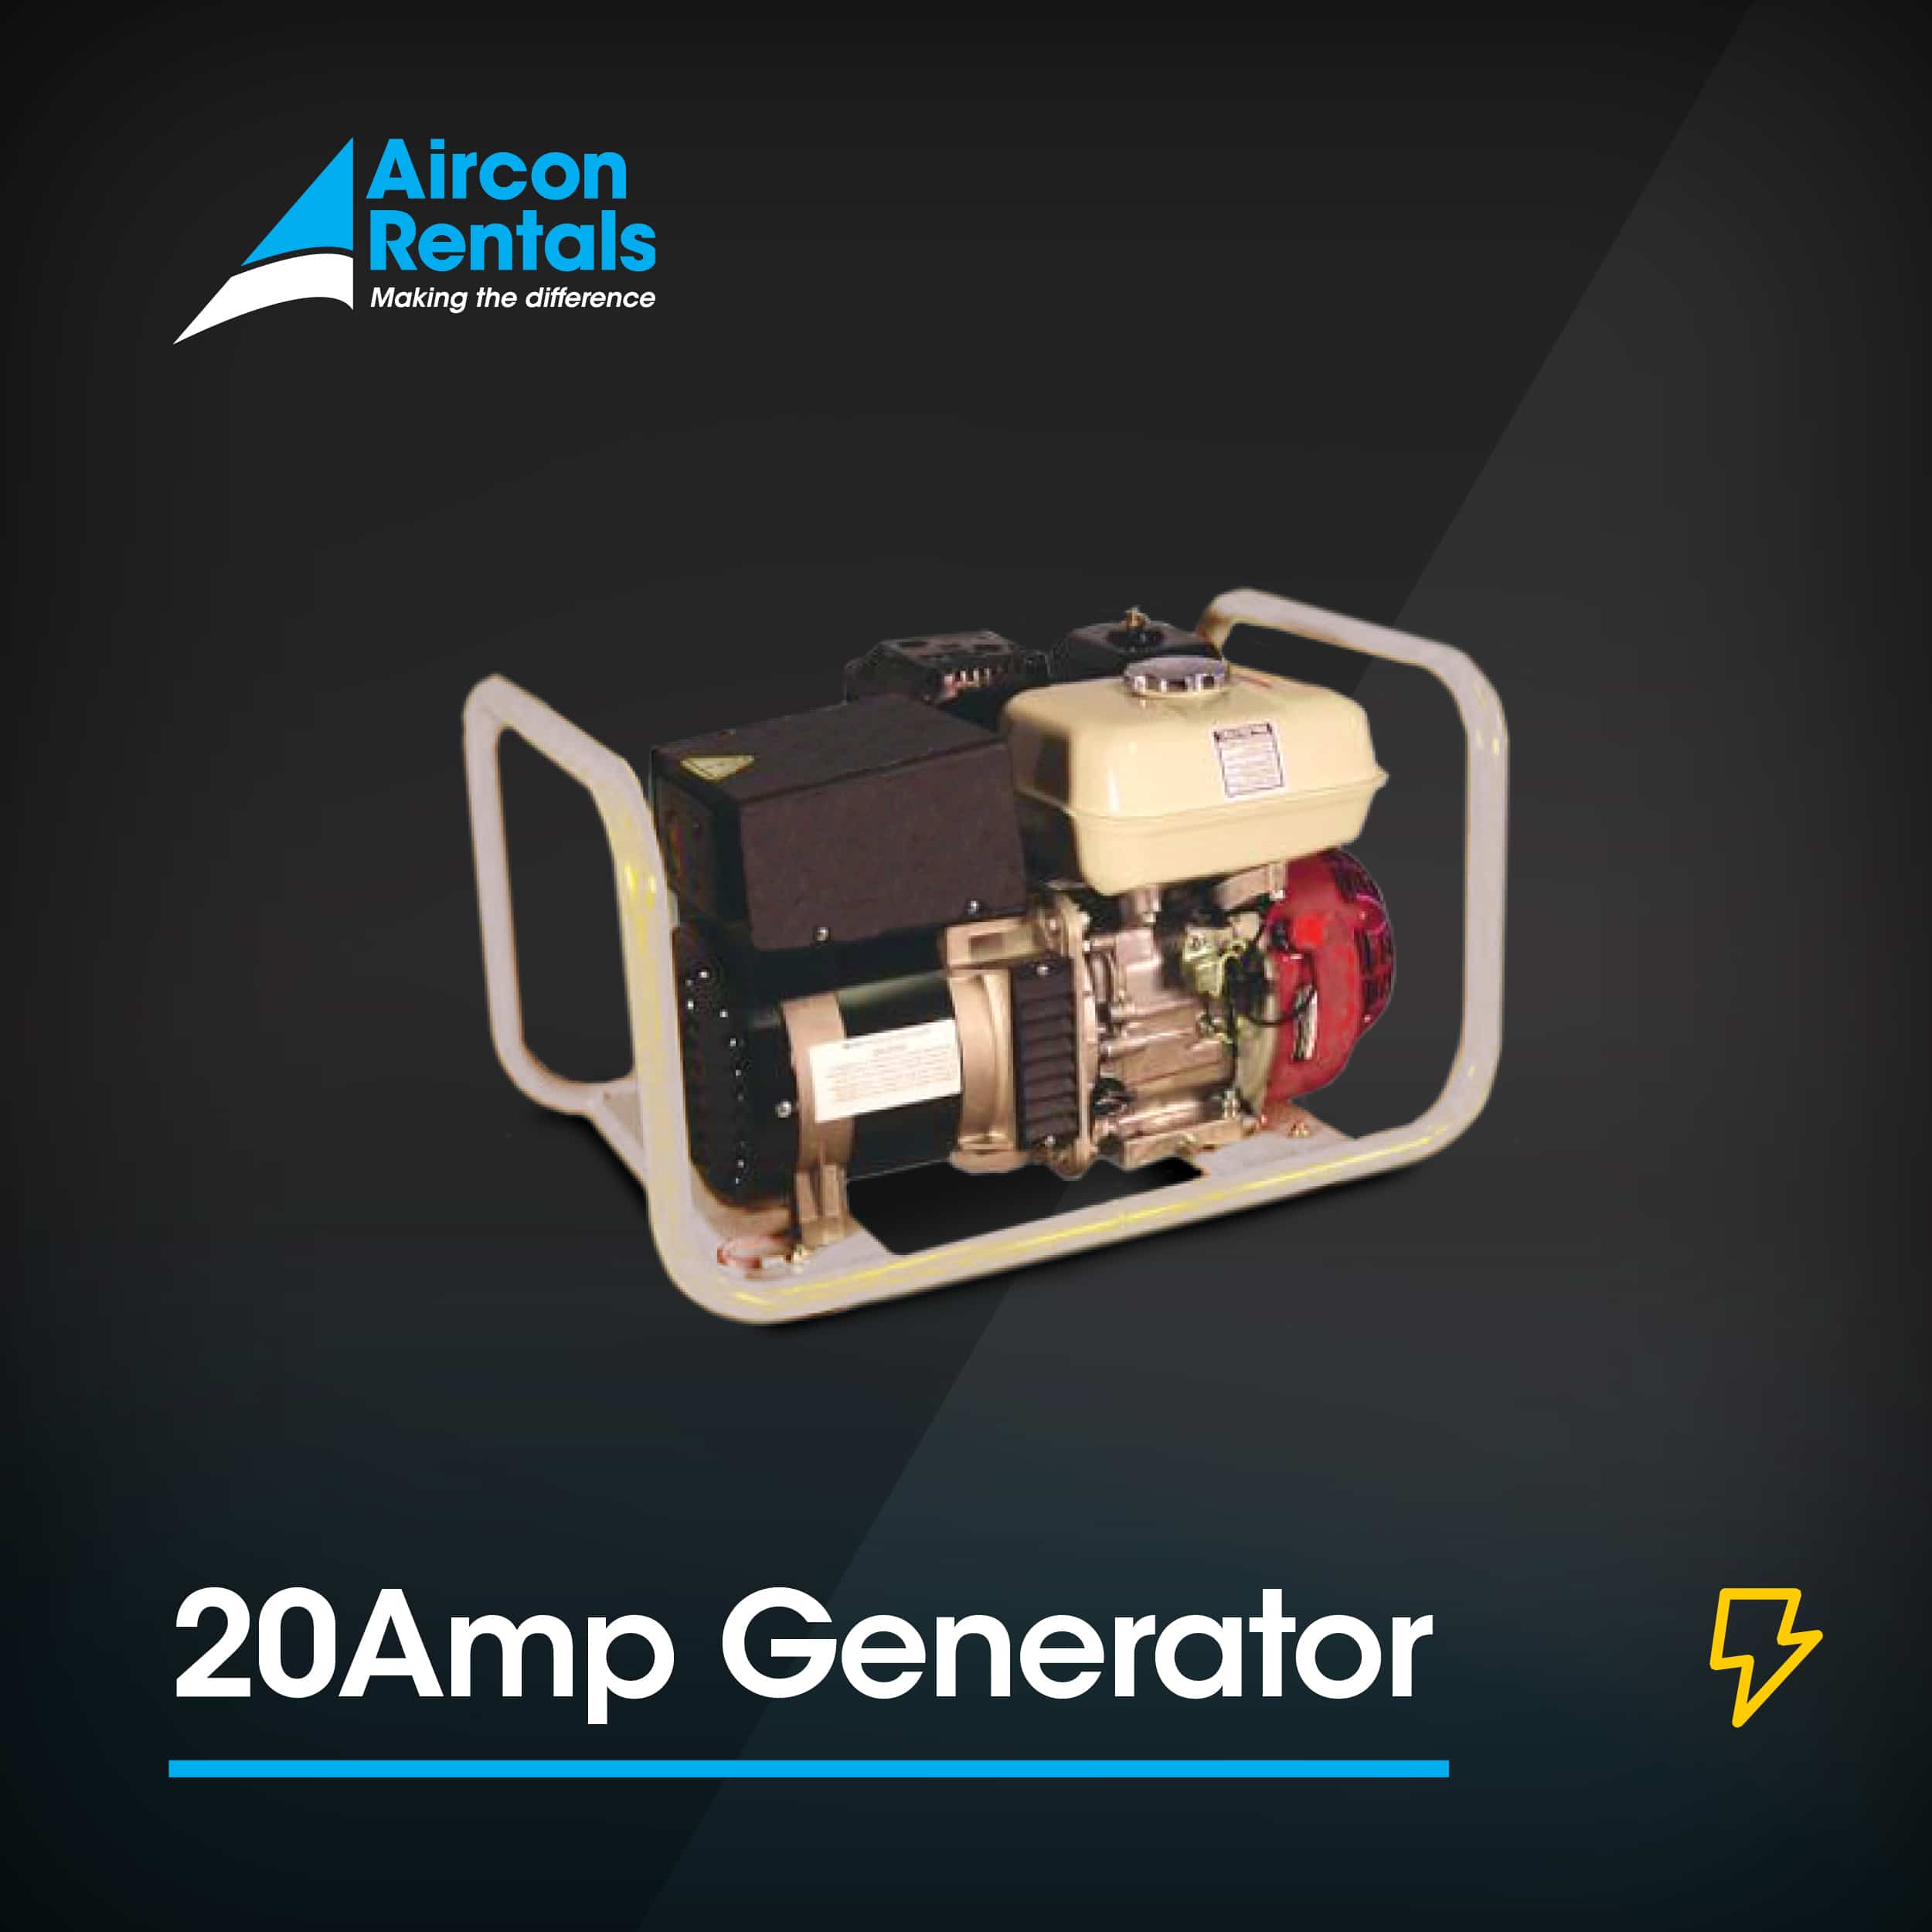 Genset Rental | Air Conditioner Rental | Aircon Rentals - 20 Amp Generator Hire